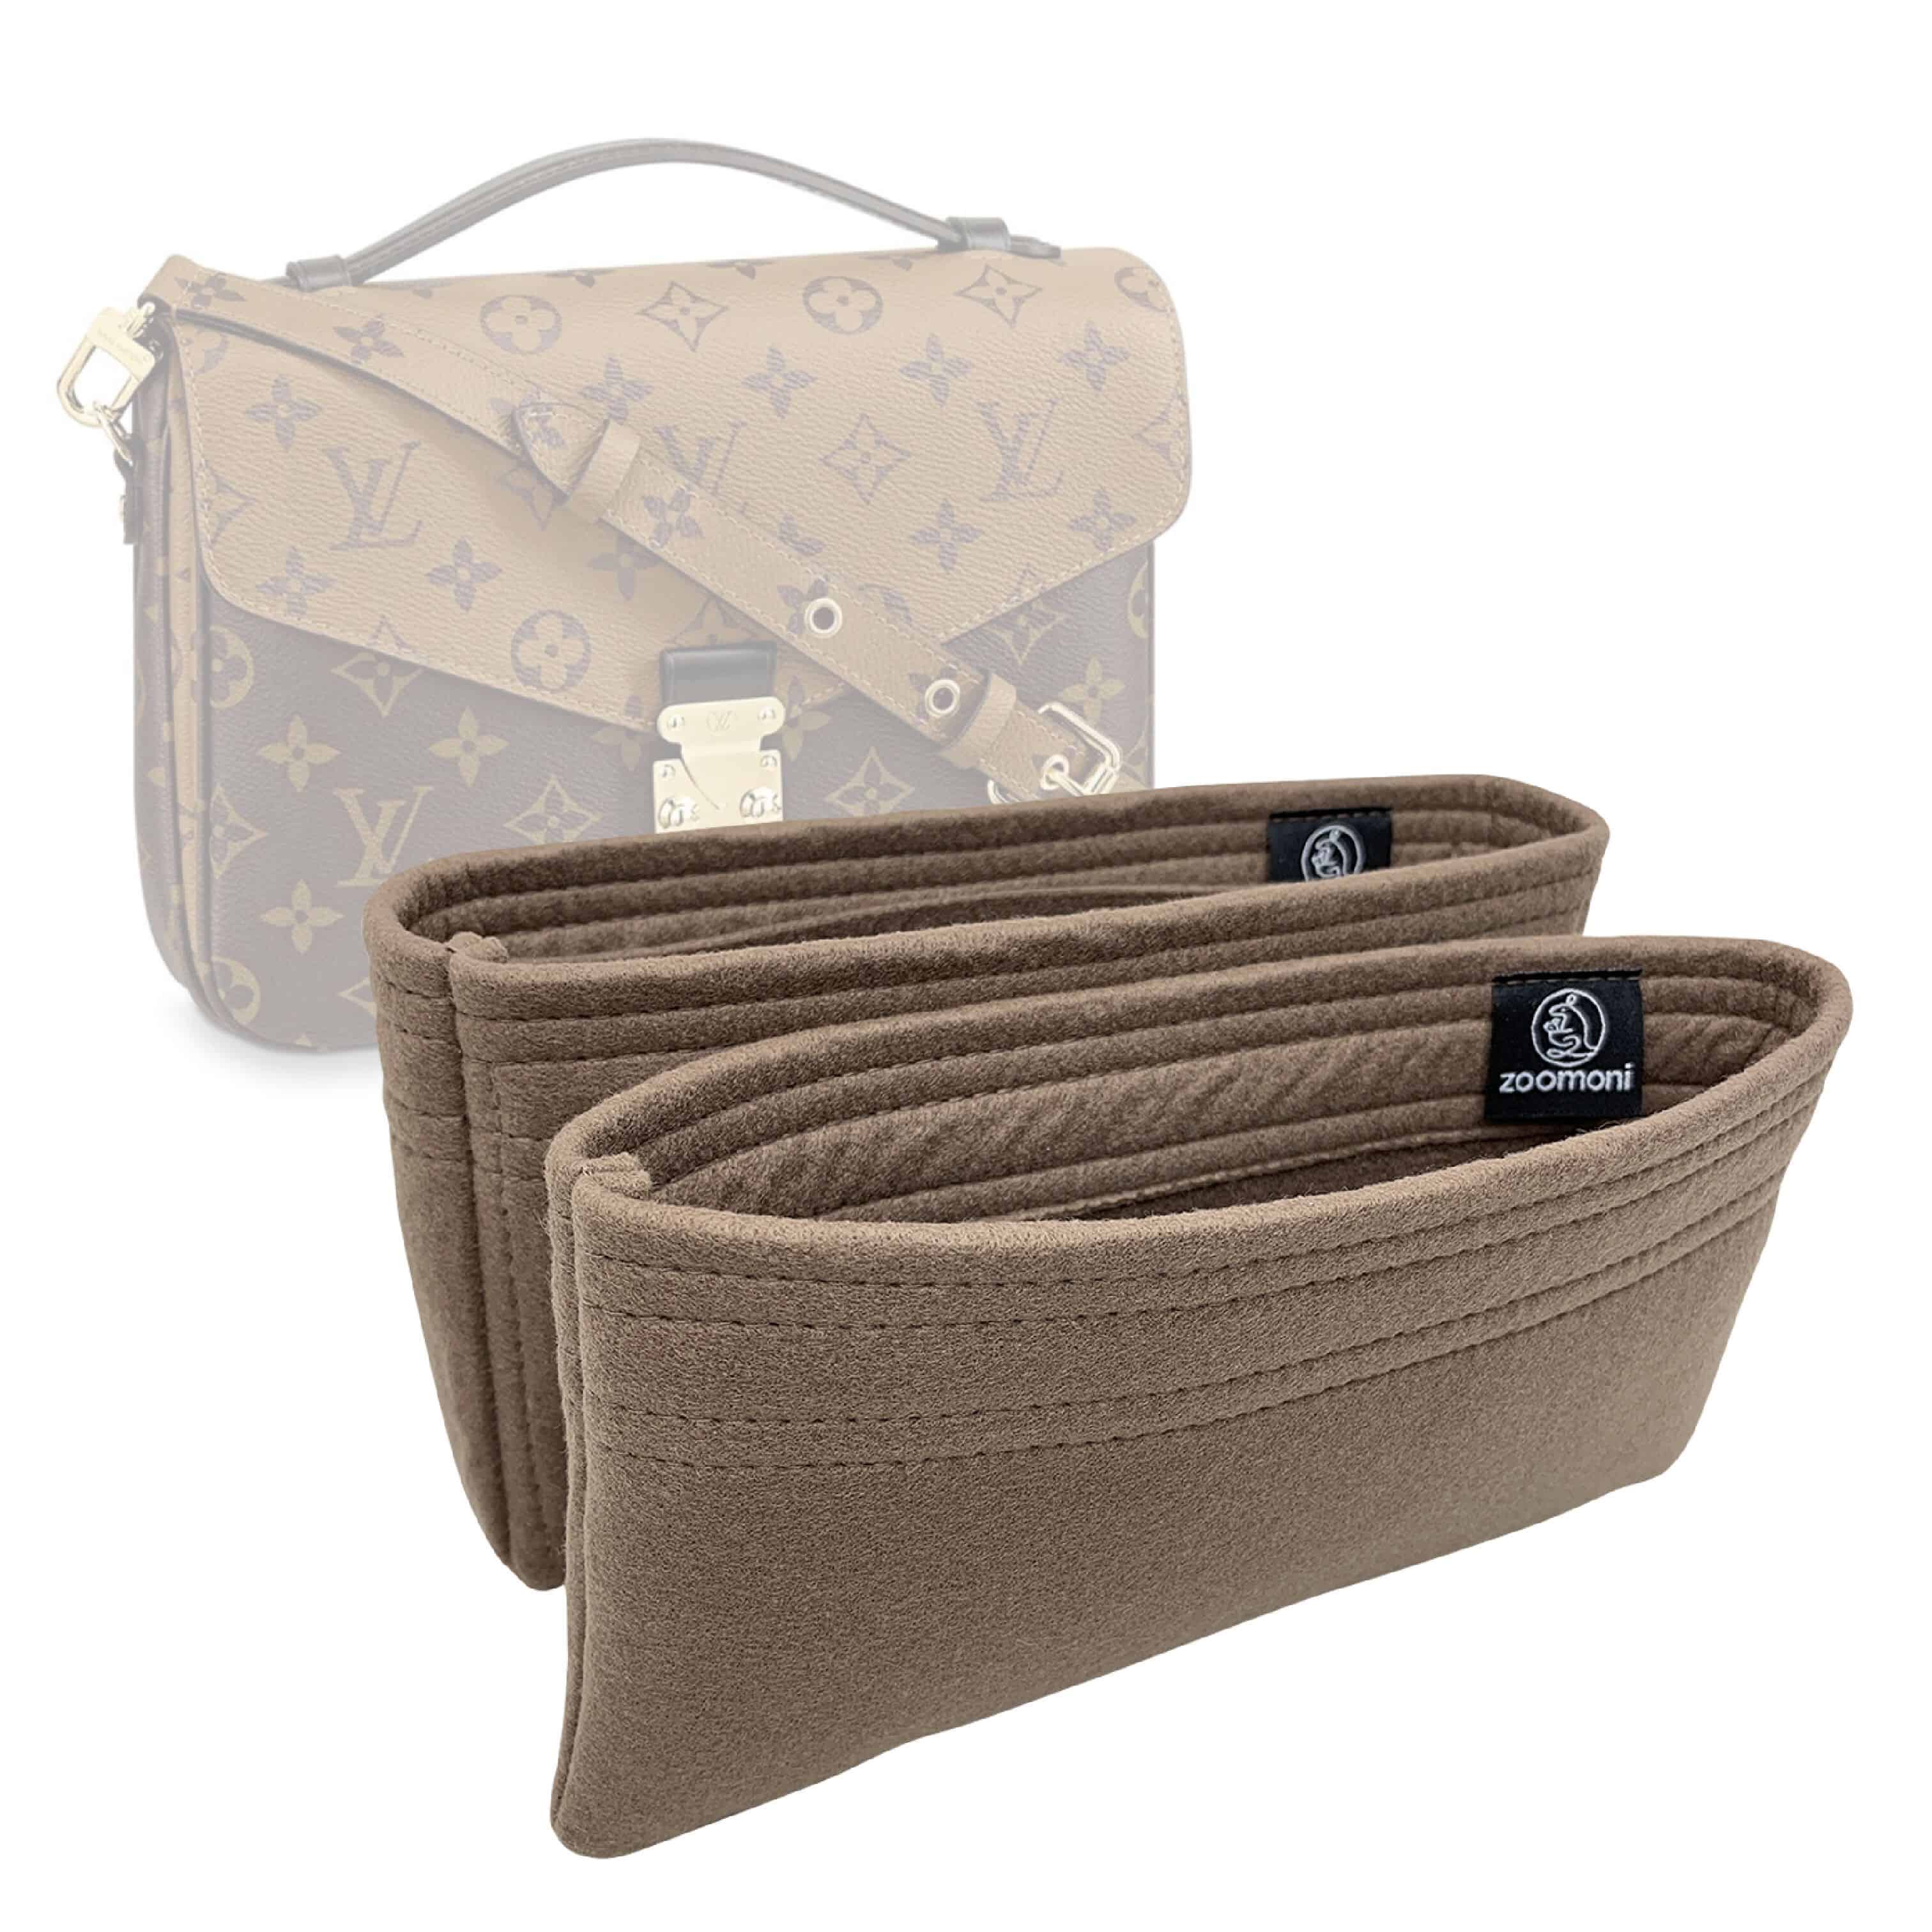  Zoomoni Bag Organizer for Louis Vuitton Etui Voyage MM -  Premium Felt Purse Handbag Insert Liner Shaper (Handmade) Soft Structure  Support : Handmade Products